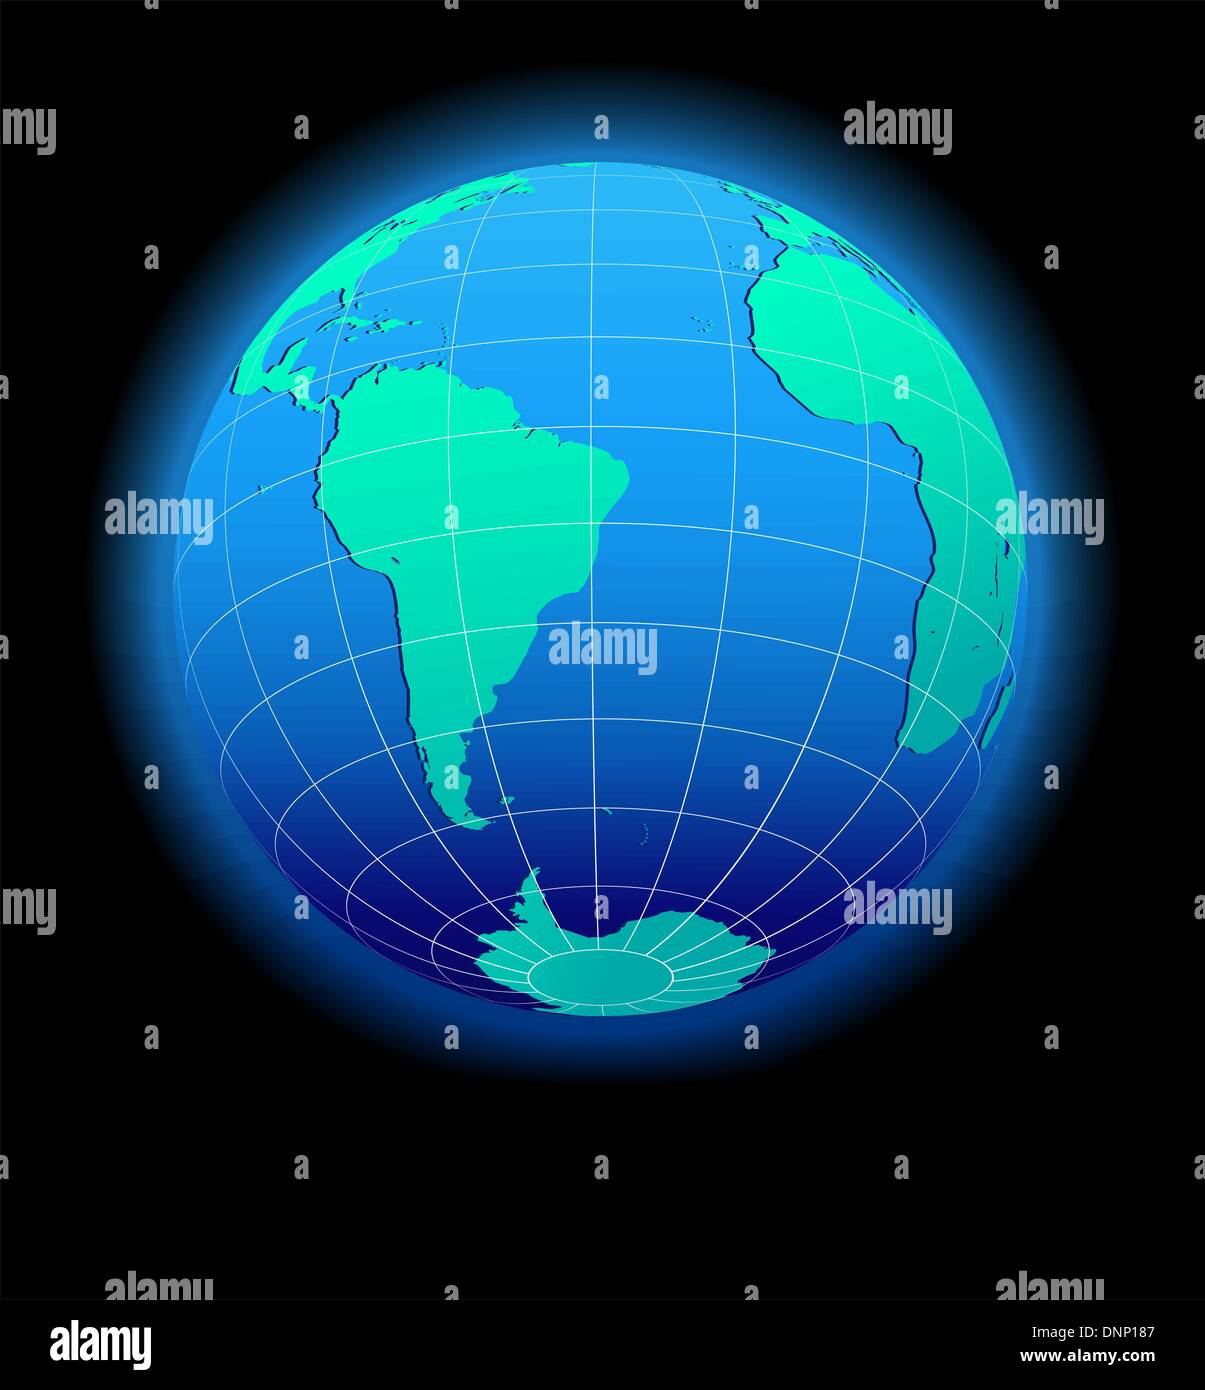 Vektor-Kartensymbol der Welt in Globe-Form - Südamerika Stock Vektor